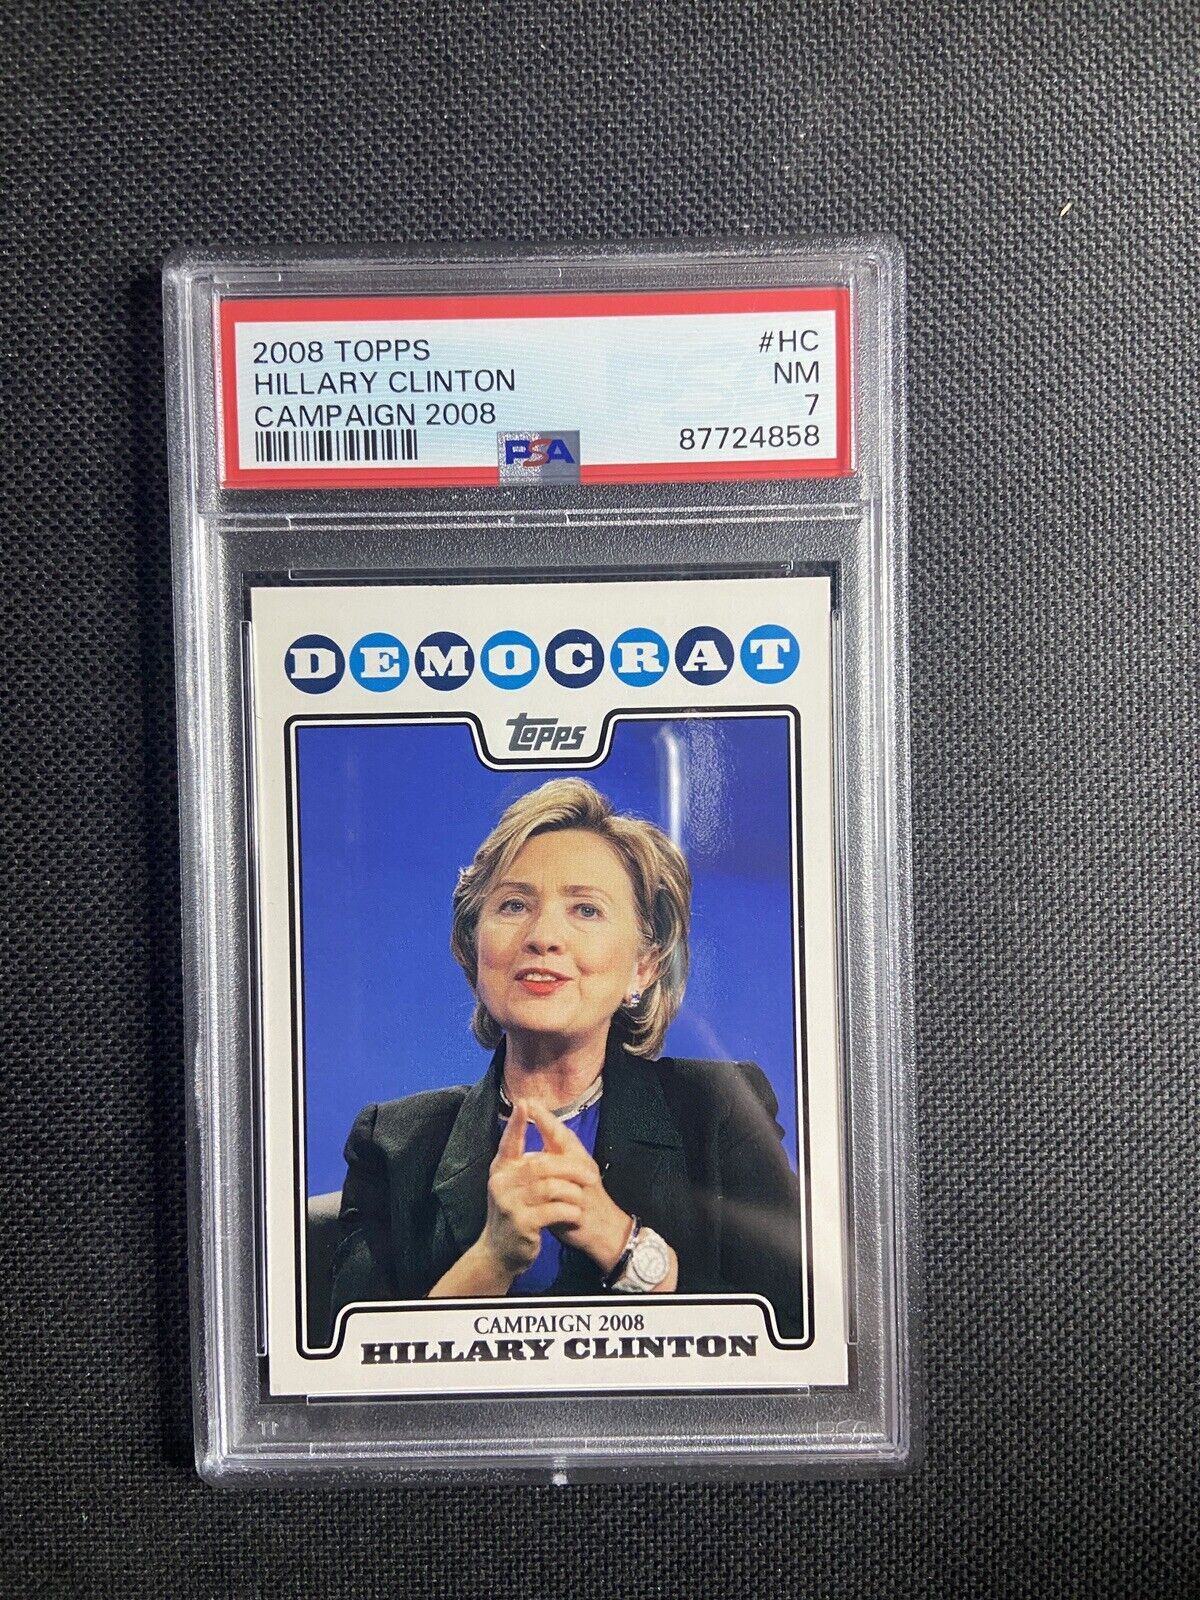 Hillary Clinton 2008 Topps Campaign Card HC PSA 7